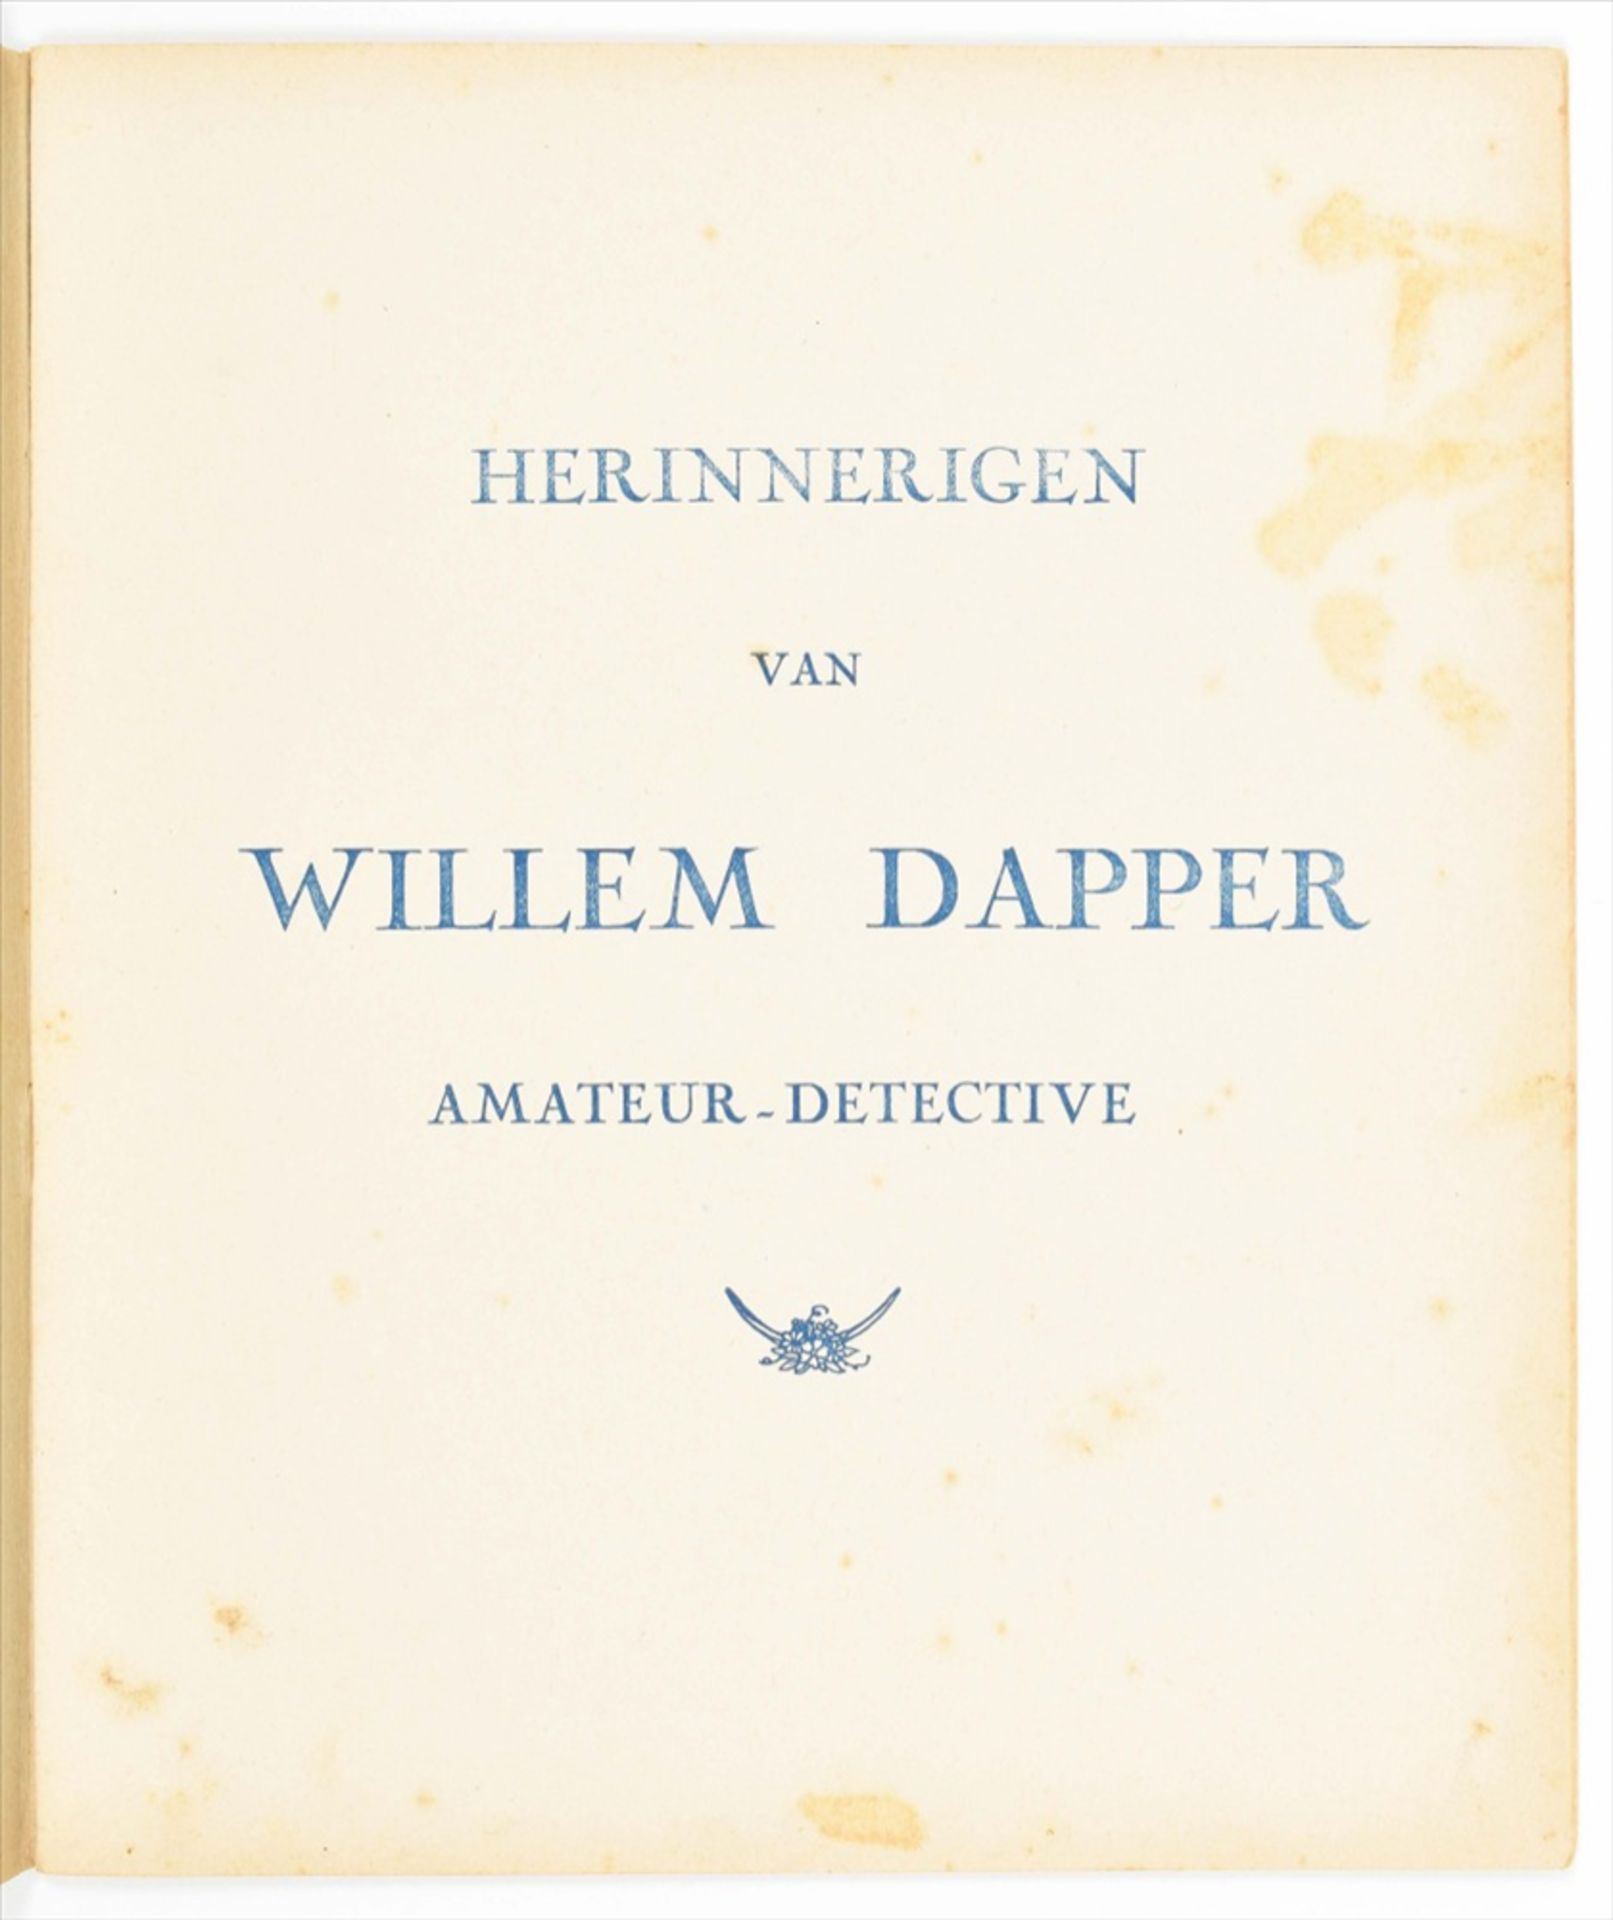 Marijac. Willem Dapper - Image 5 of 10